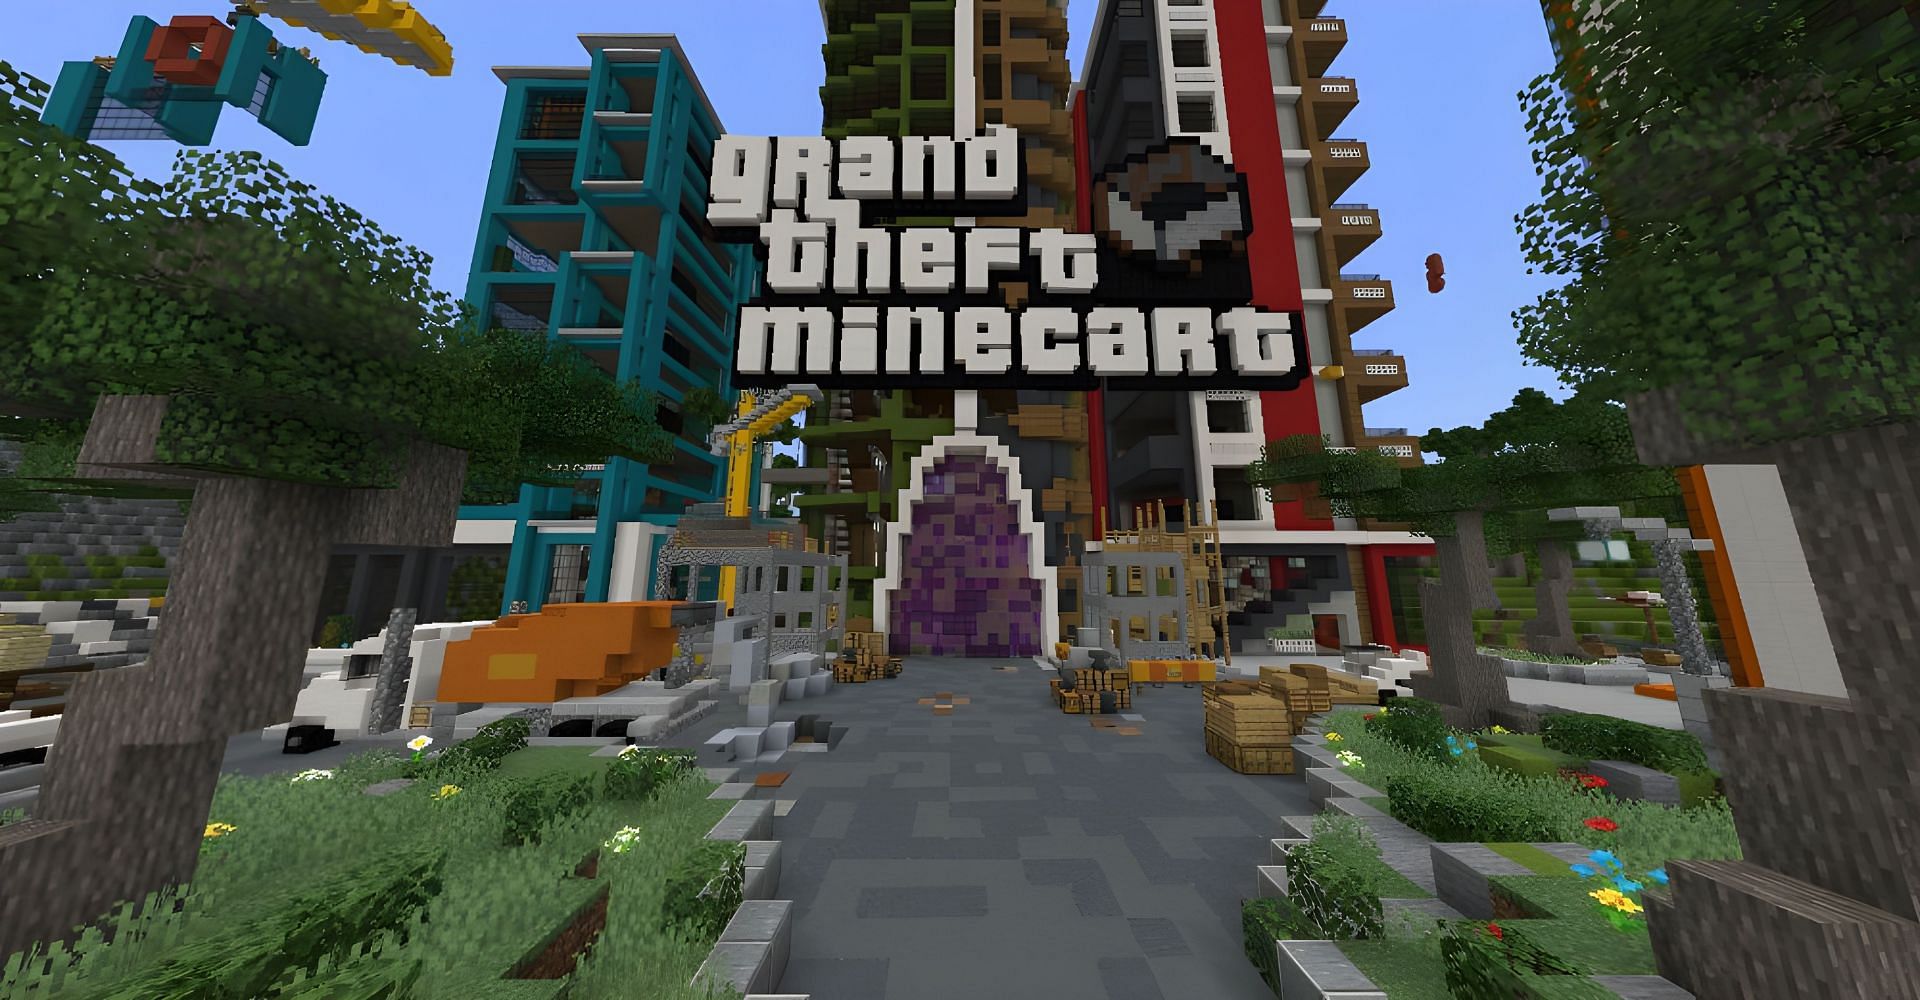 GrandTheftMinecart is just like GTA but in Minecraft (Image via Mojang)